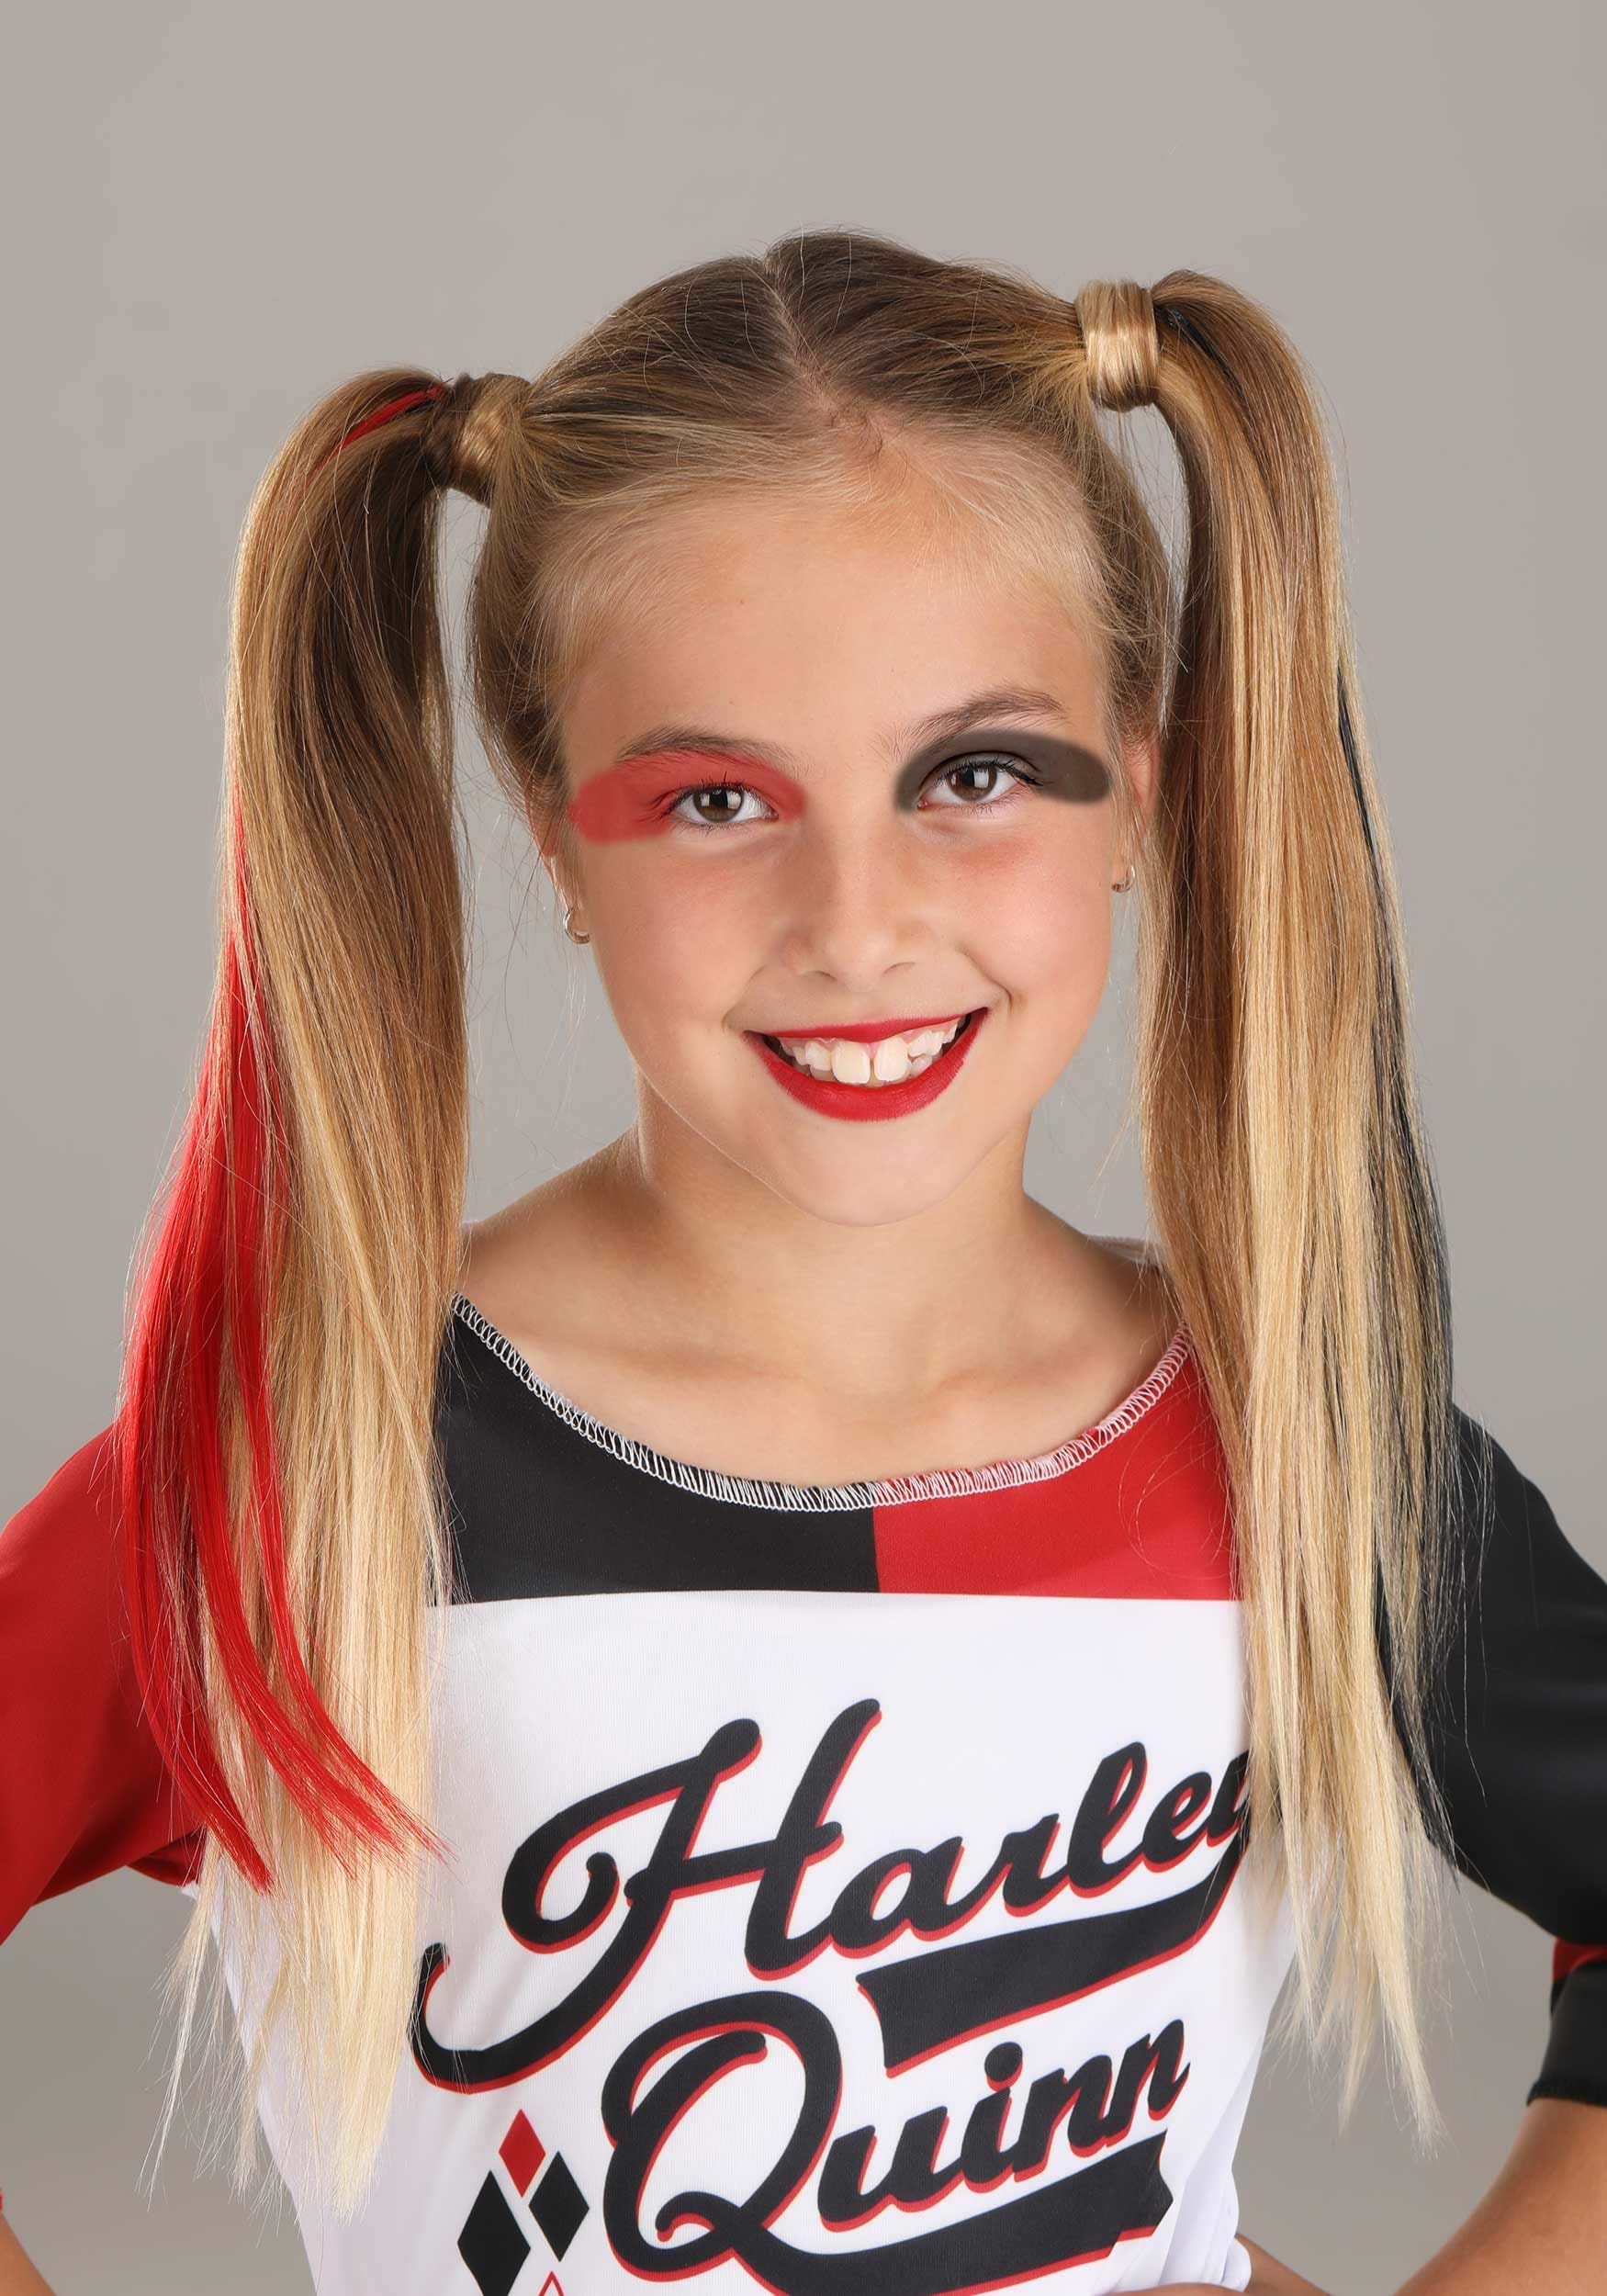 Costume Halloween Bambina Harley Quinn Suicide Squad Art.404323-varie  taglie